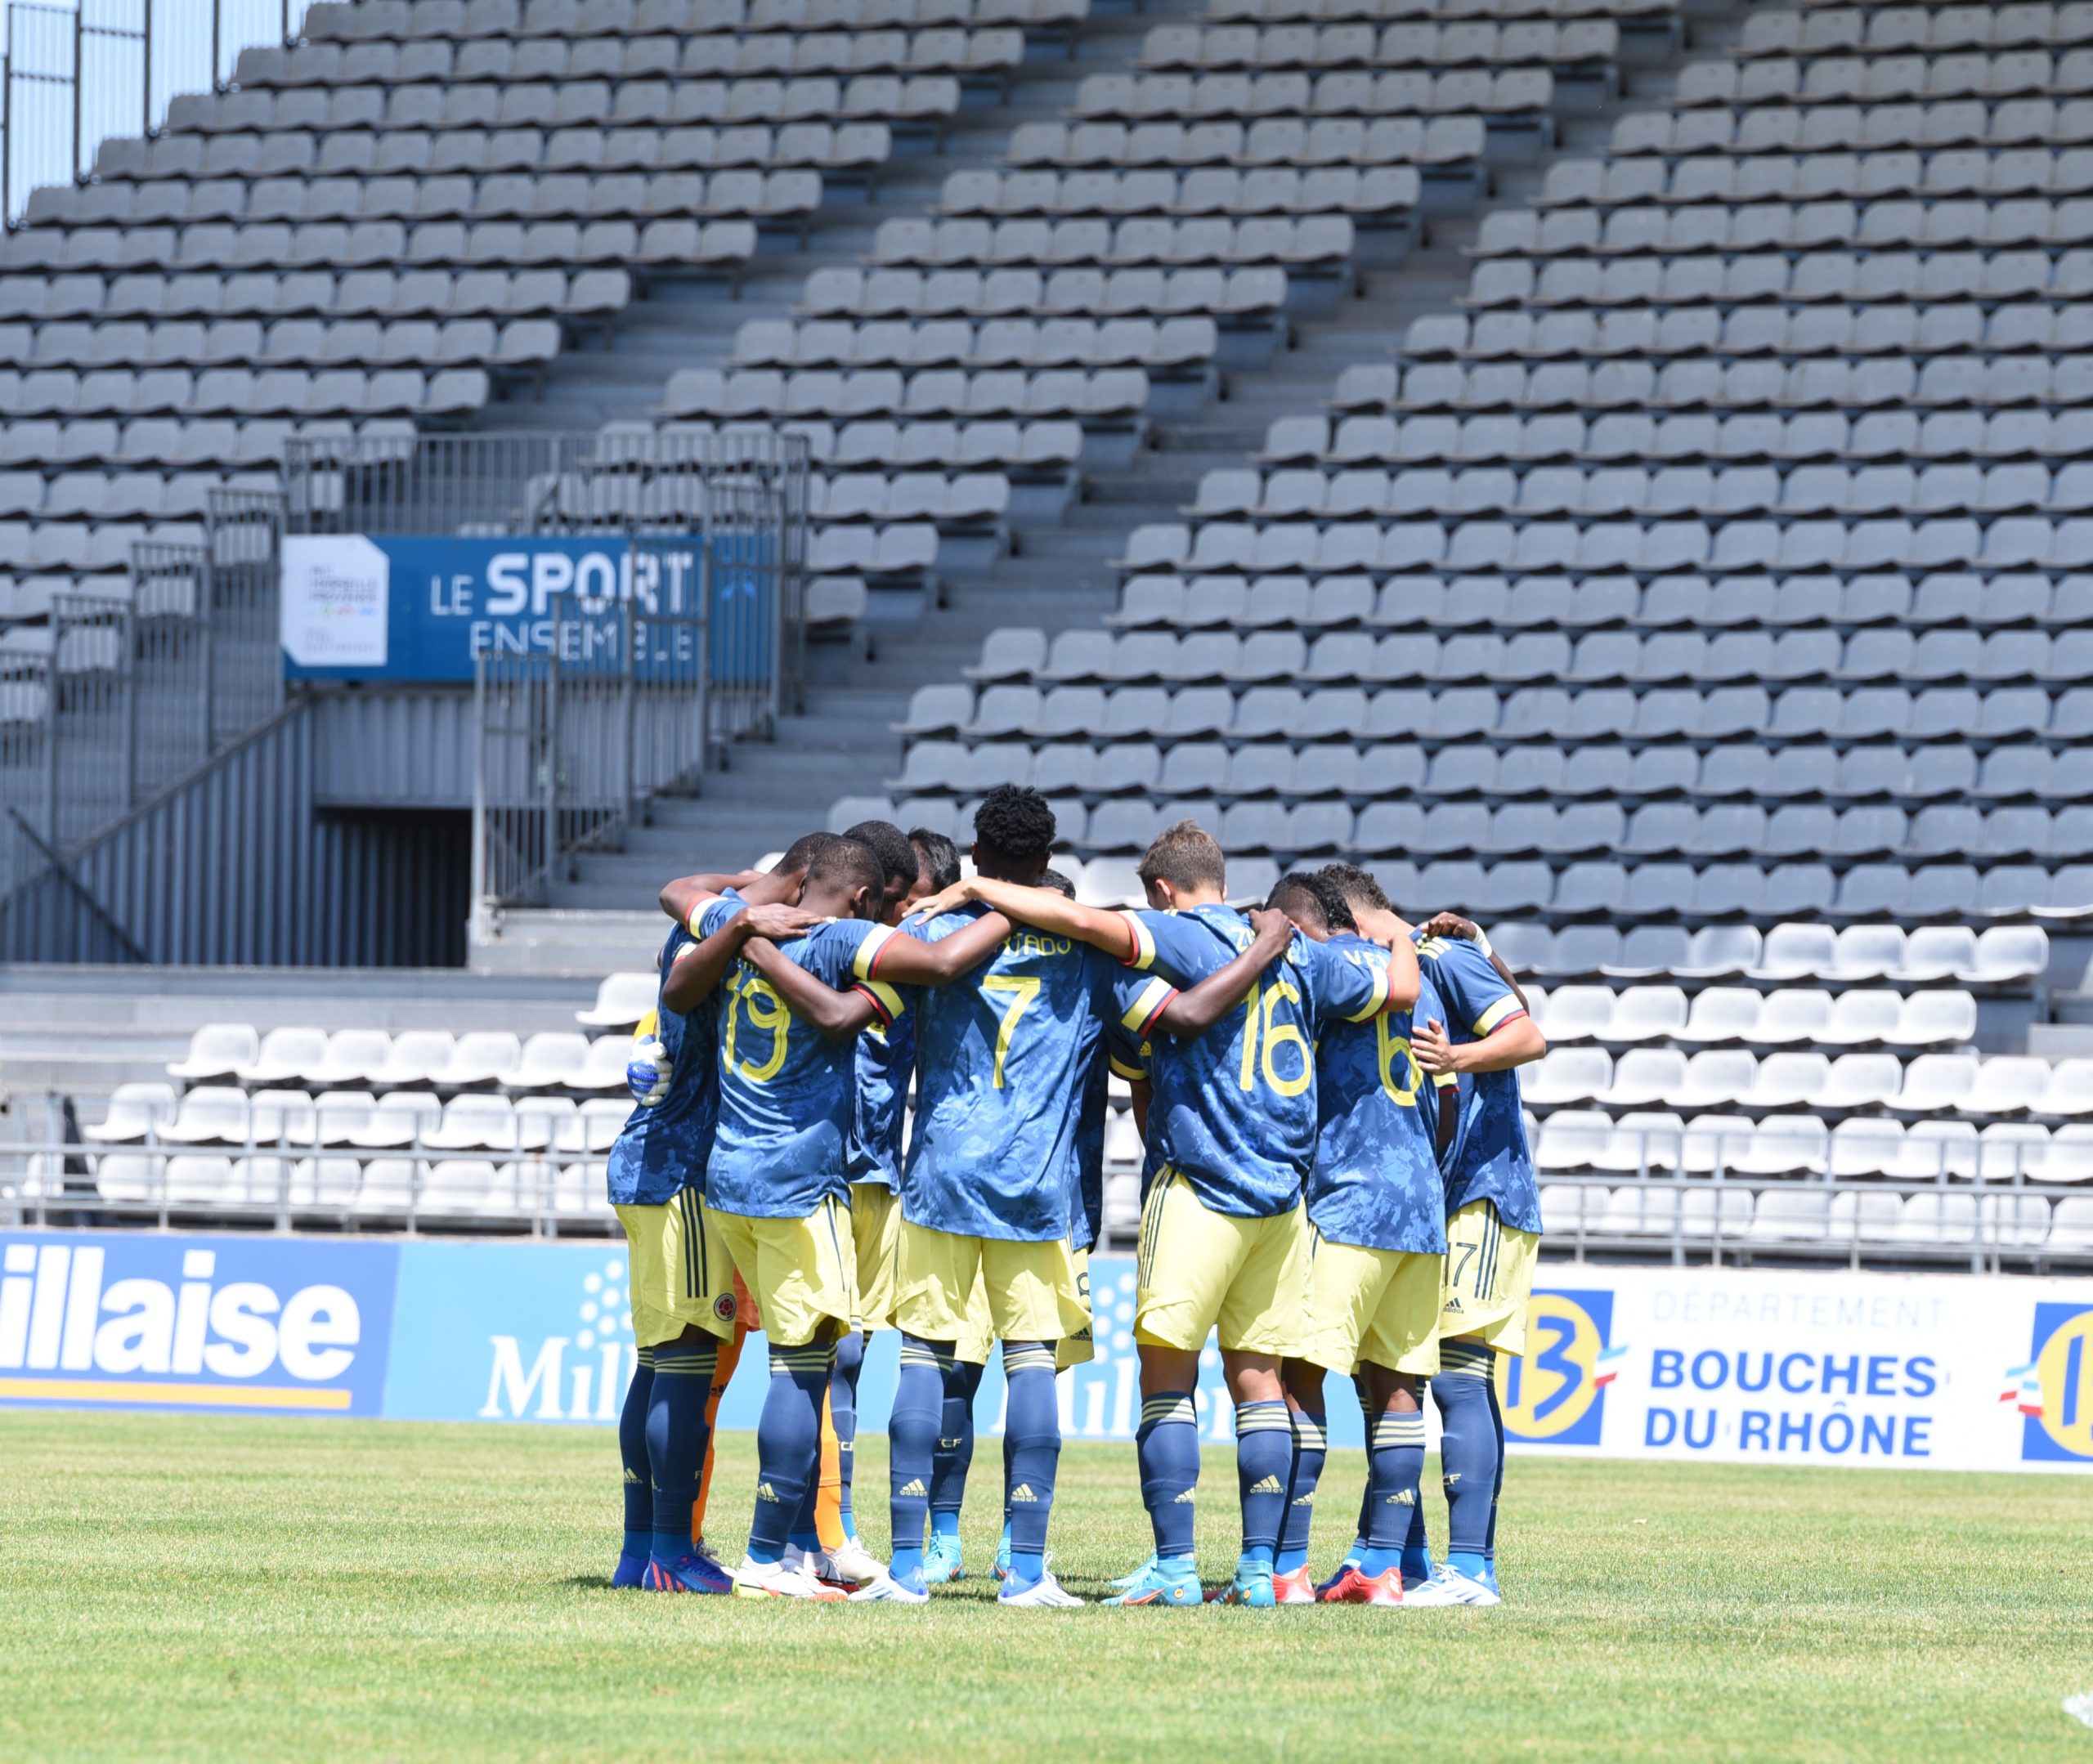 Selección Colombia sub 20 avanzó a semifinales en Torneo Maurice Revello